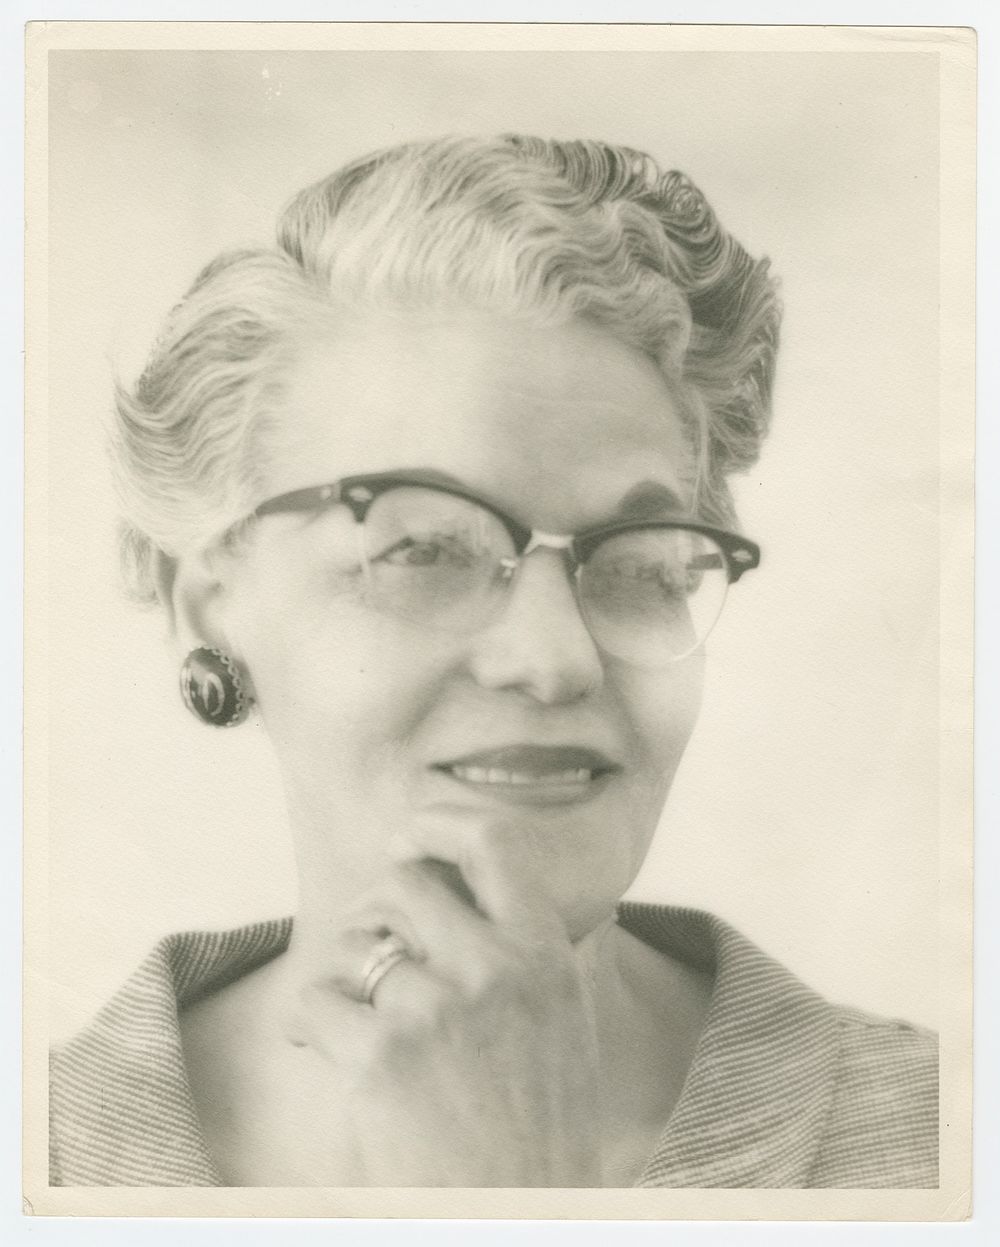 Photograph of Lollaretta Pemberton